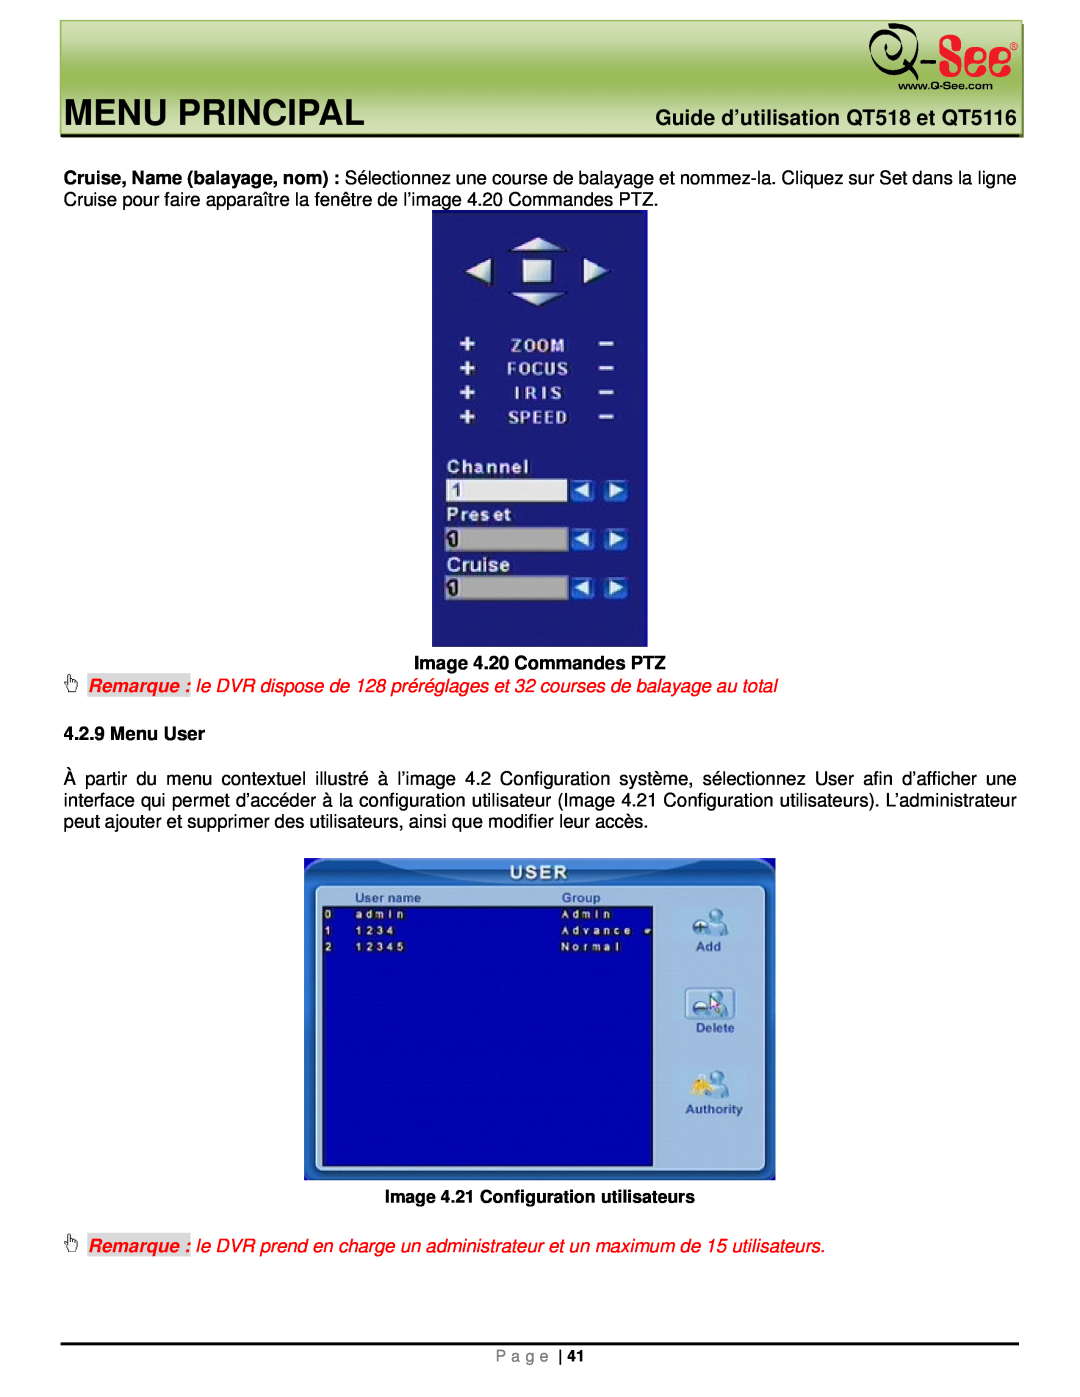 Q-See manual Menu Principal, Guide d’utilisation QT518 et QT5116, Image 4.20 Commandes PTZ, Menu User 